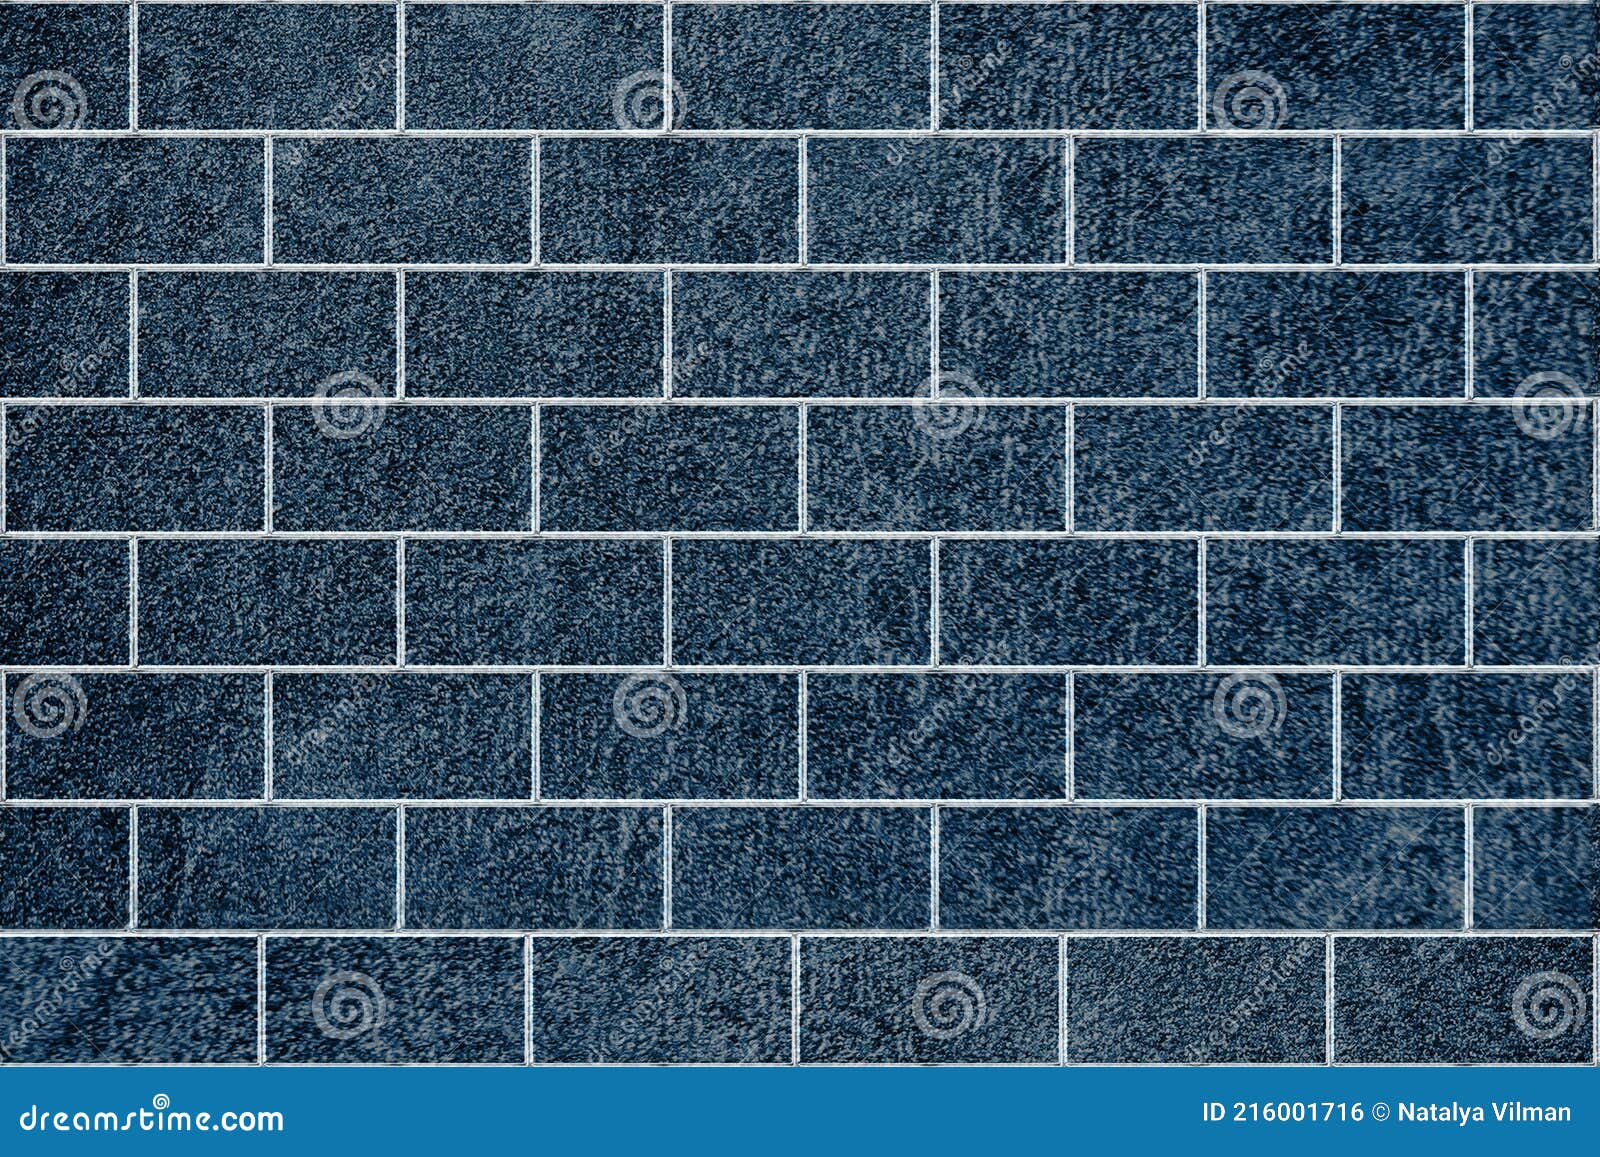 Imitation of a Brick Wall with Dark Blue Decorative Plaster ...